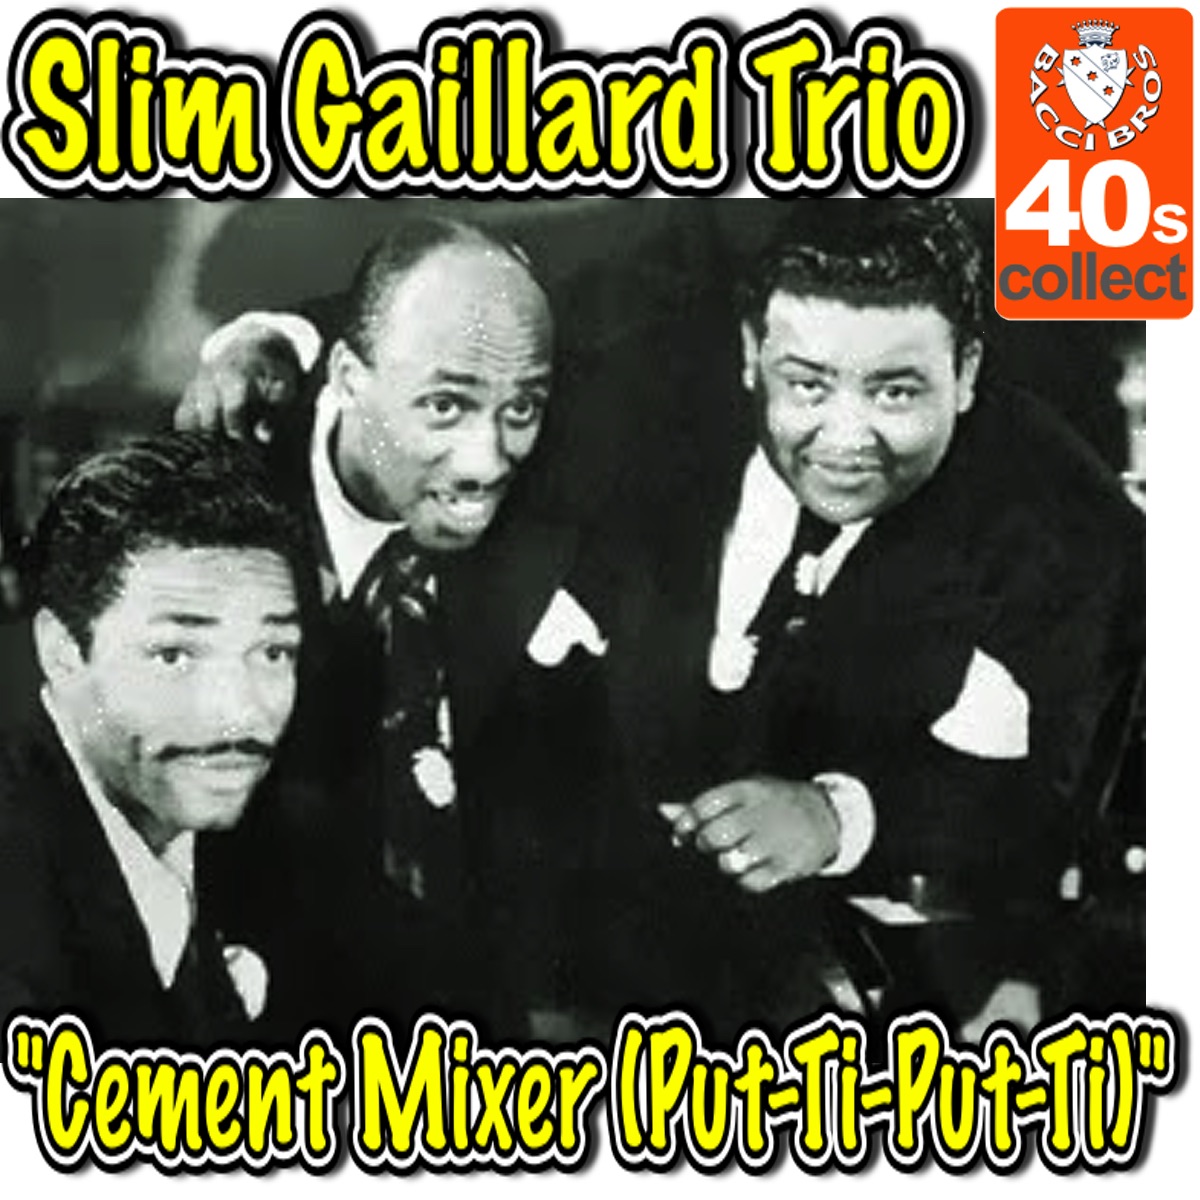 Cement Mixer (Put-Ti-Put-Ti) - Single - Album by Slim Gaillard Trio - Apple  Music